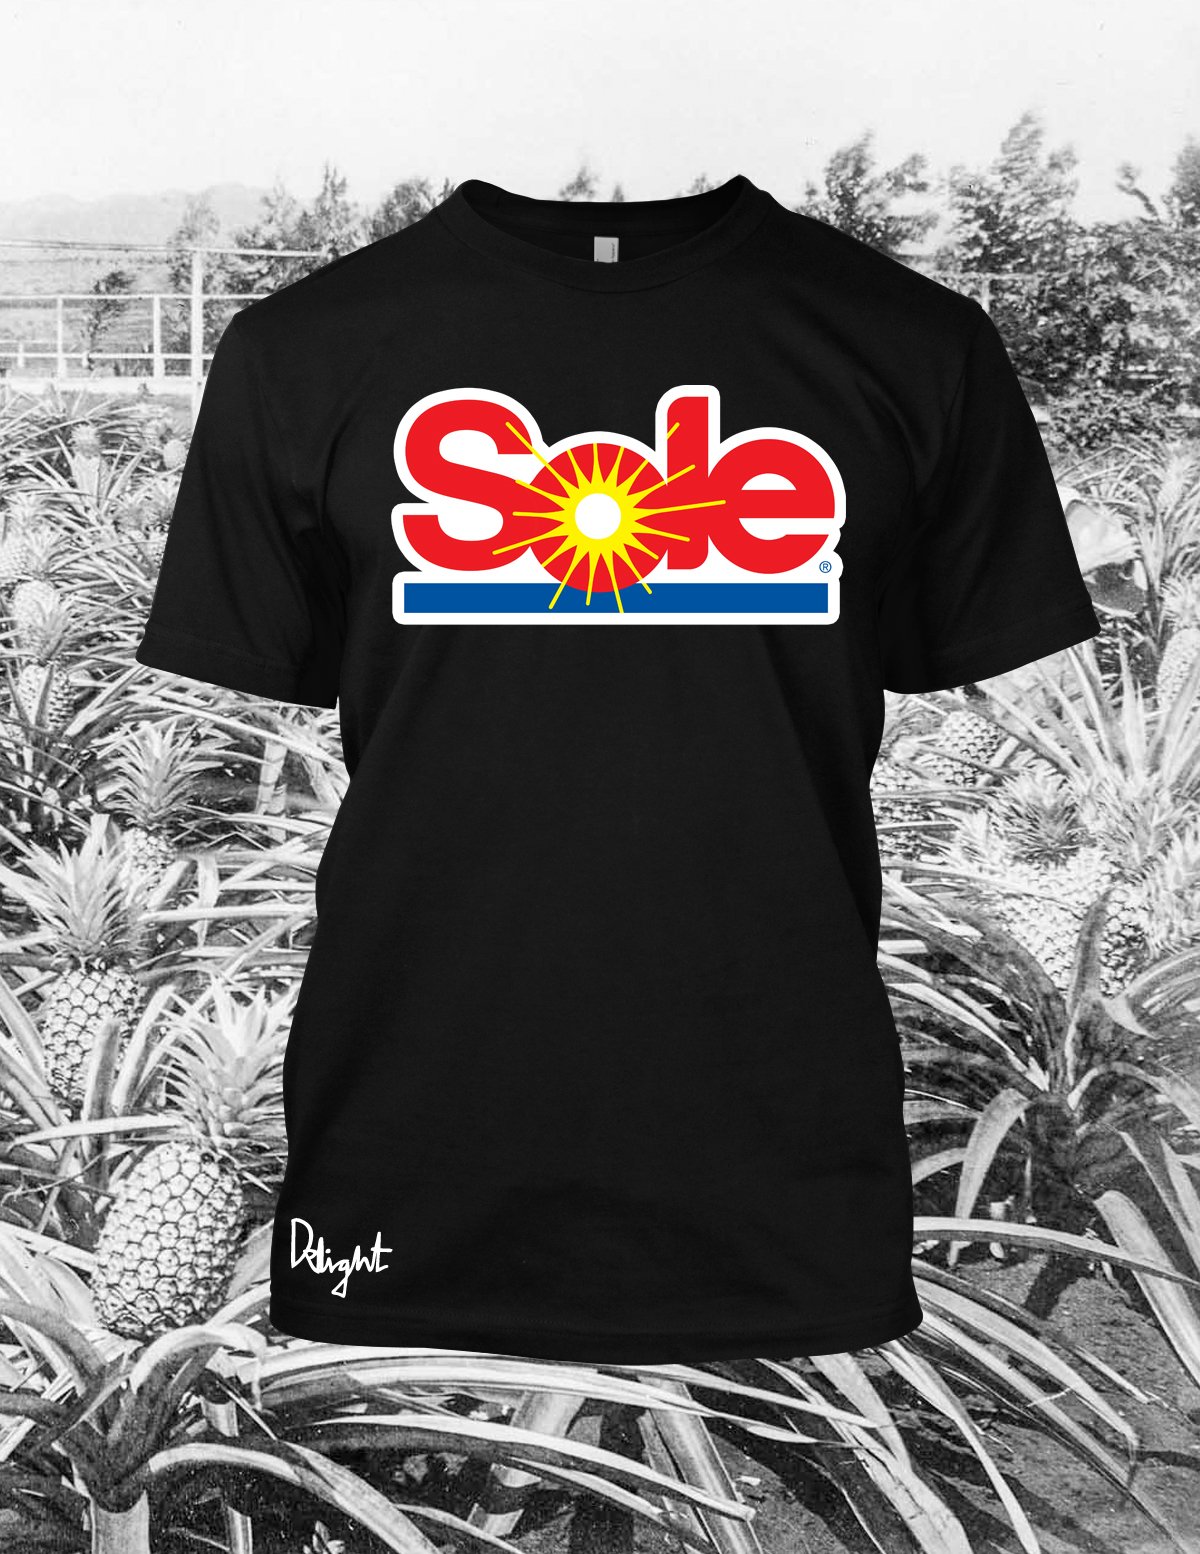 SOLE T-shirt (Black) Adult & Kids Sizes